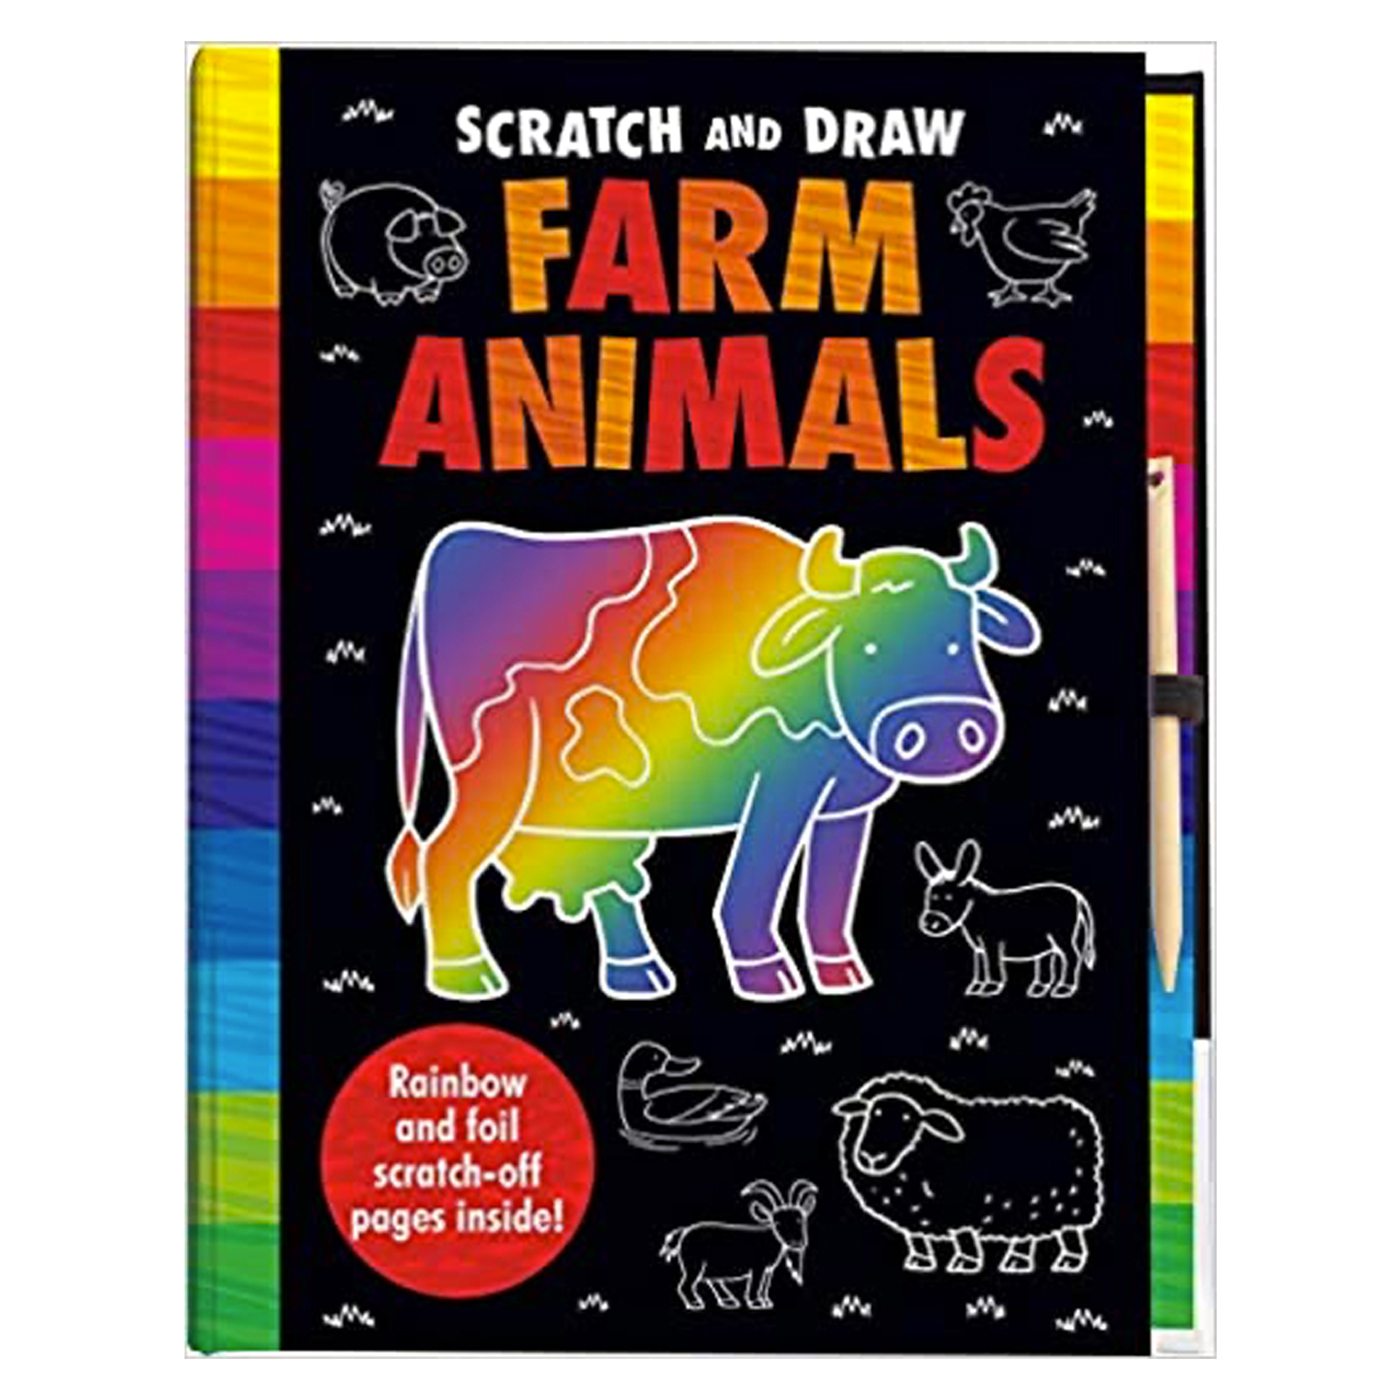 IMAGINE THAT Scratch and Draw: Farm Animals